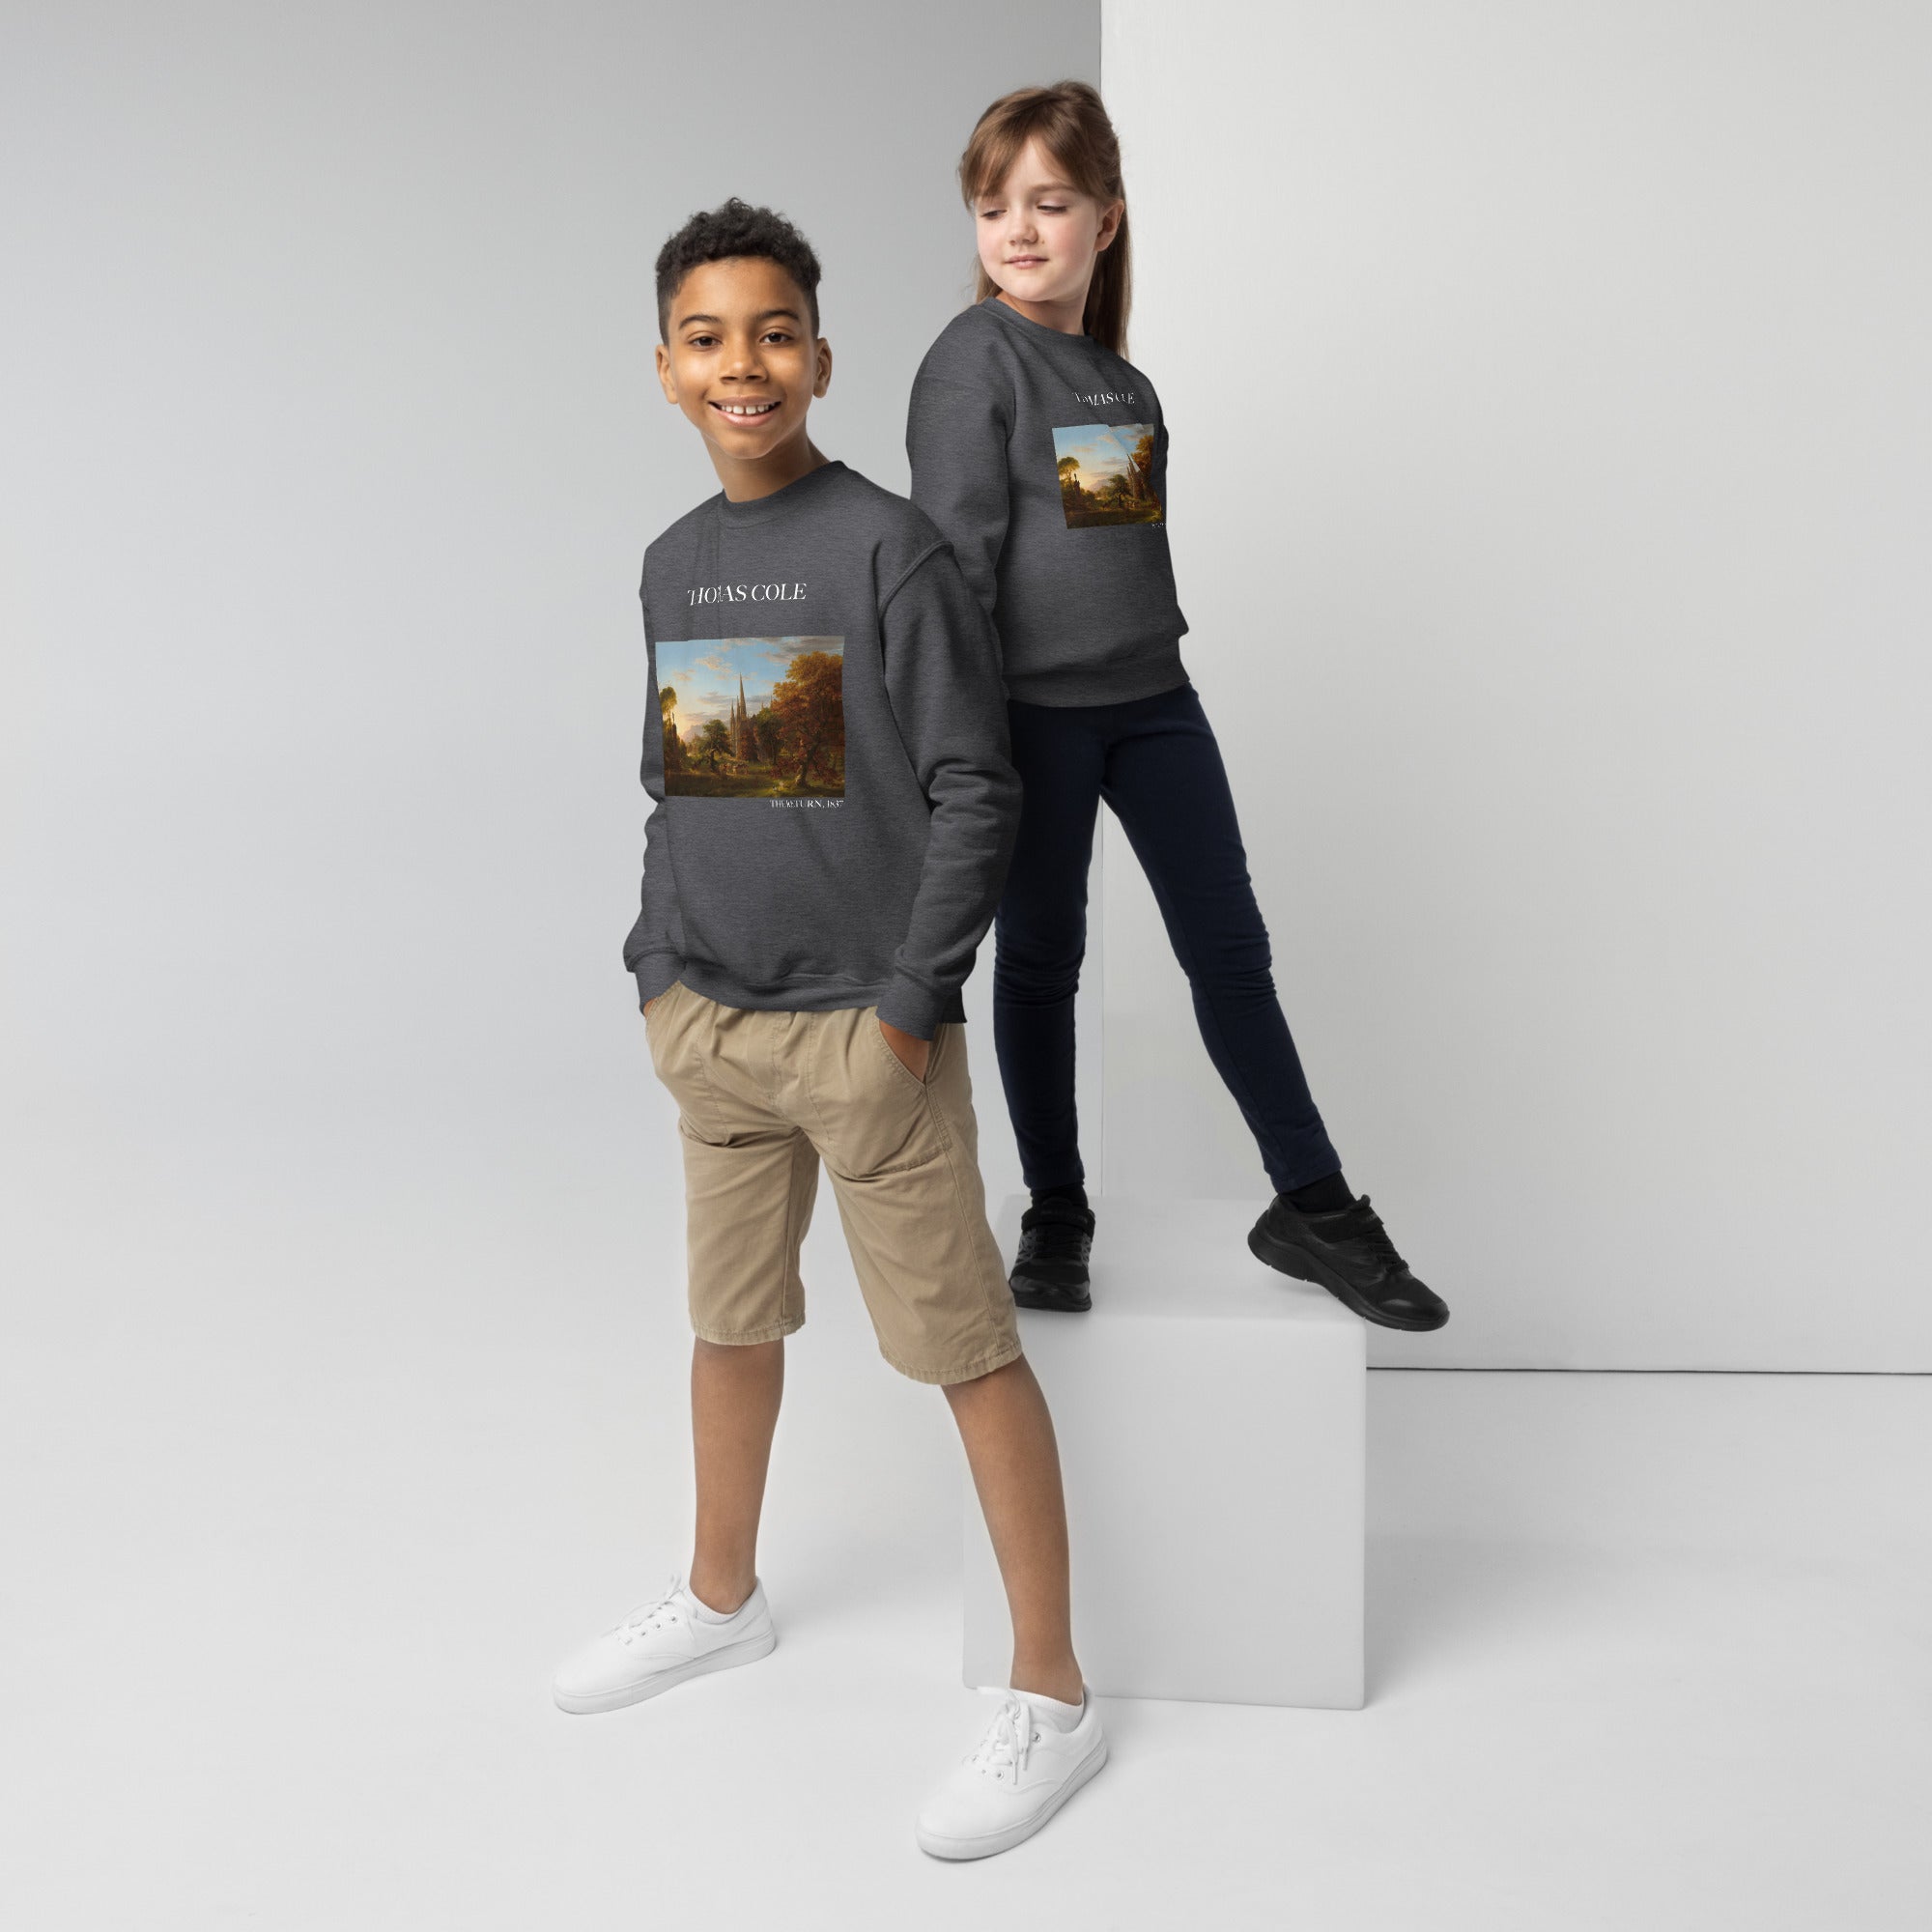 Thomas Cole 'The Return' Famous Painting Crewneck Sweatshirt | Premium Youth Art Sweatshirt